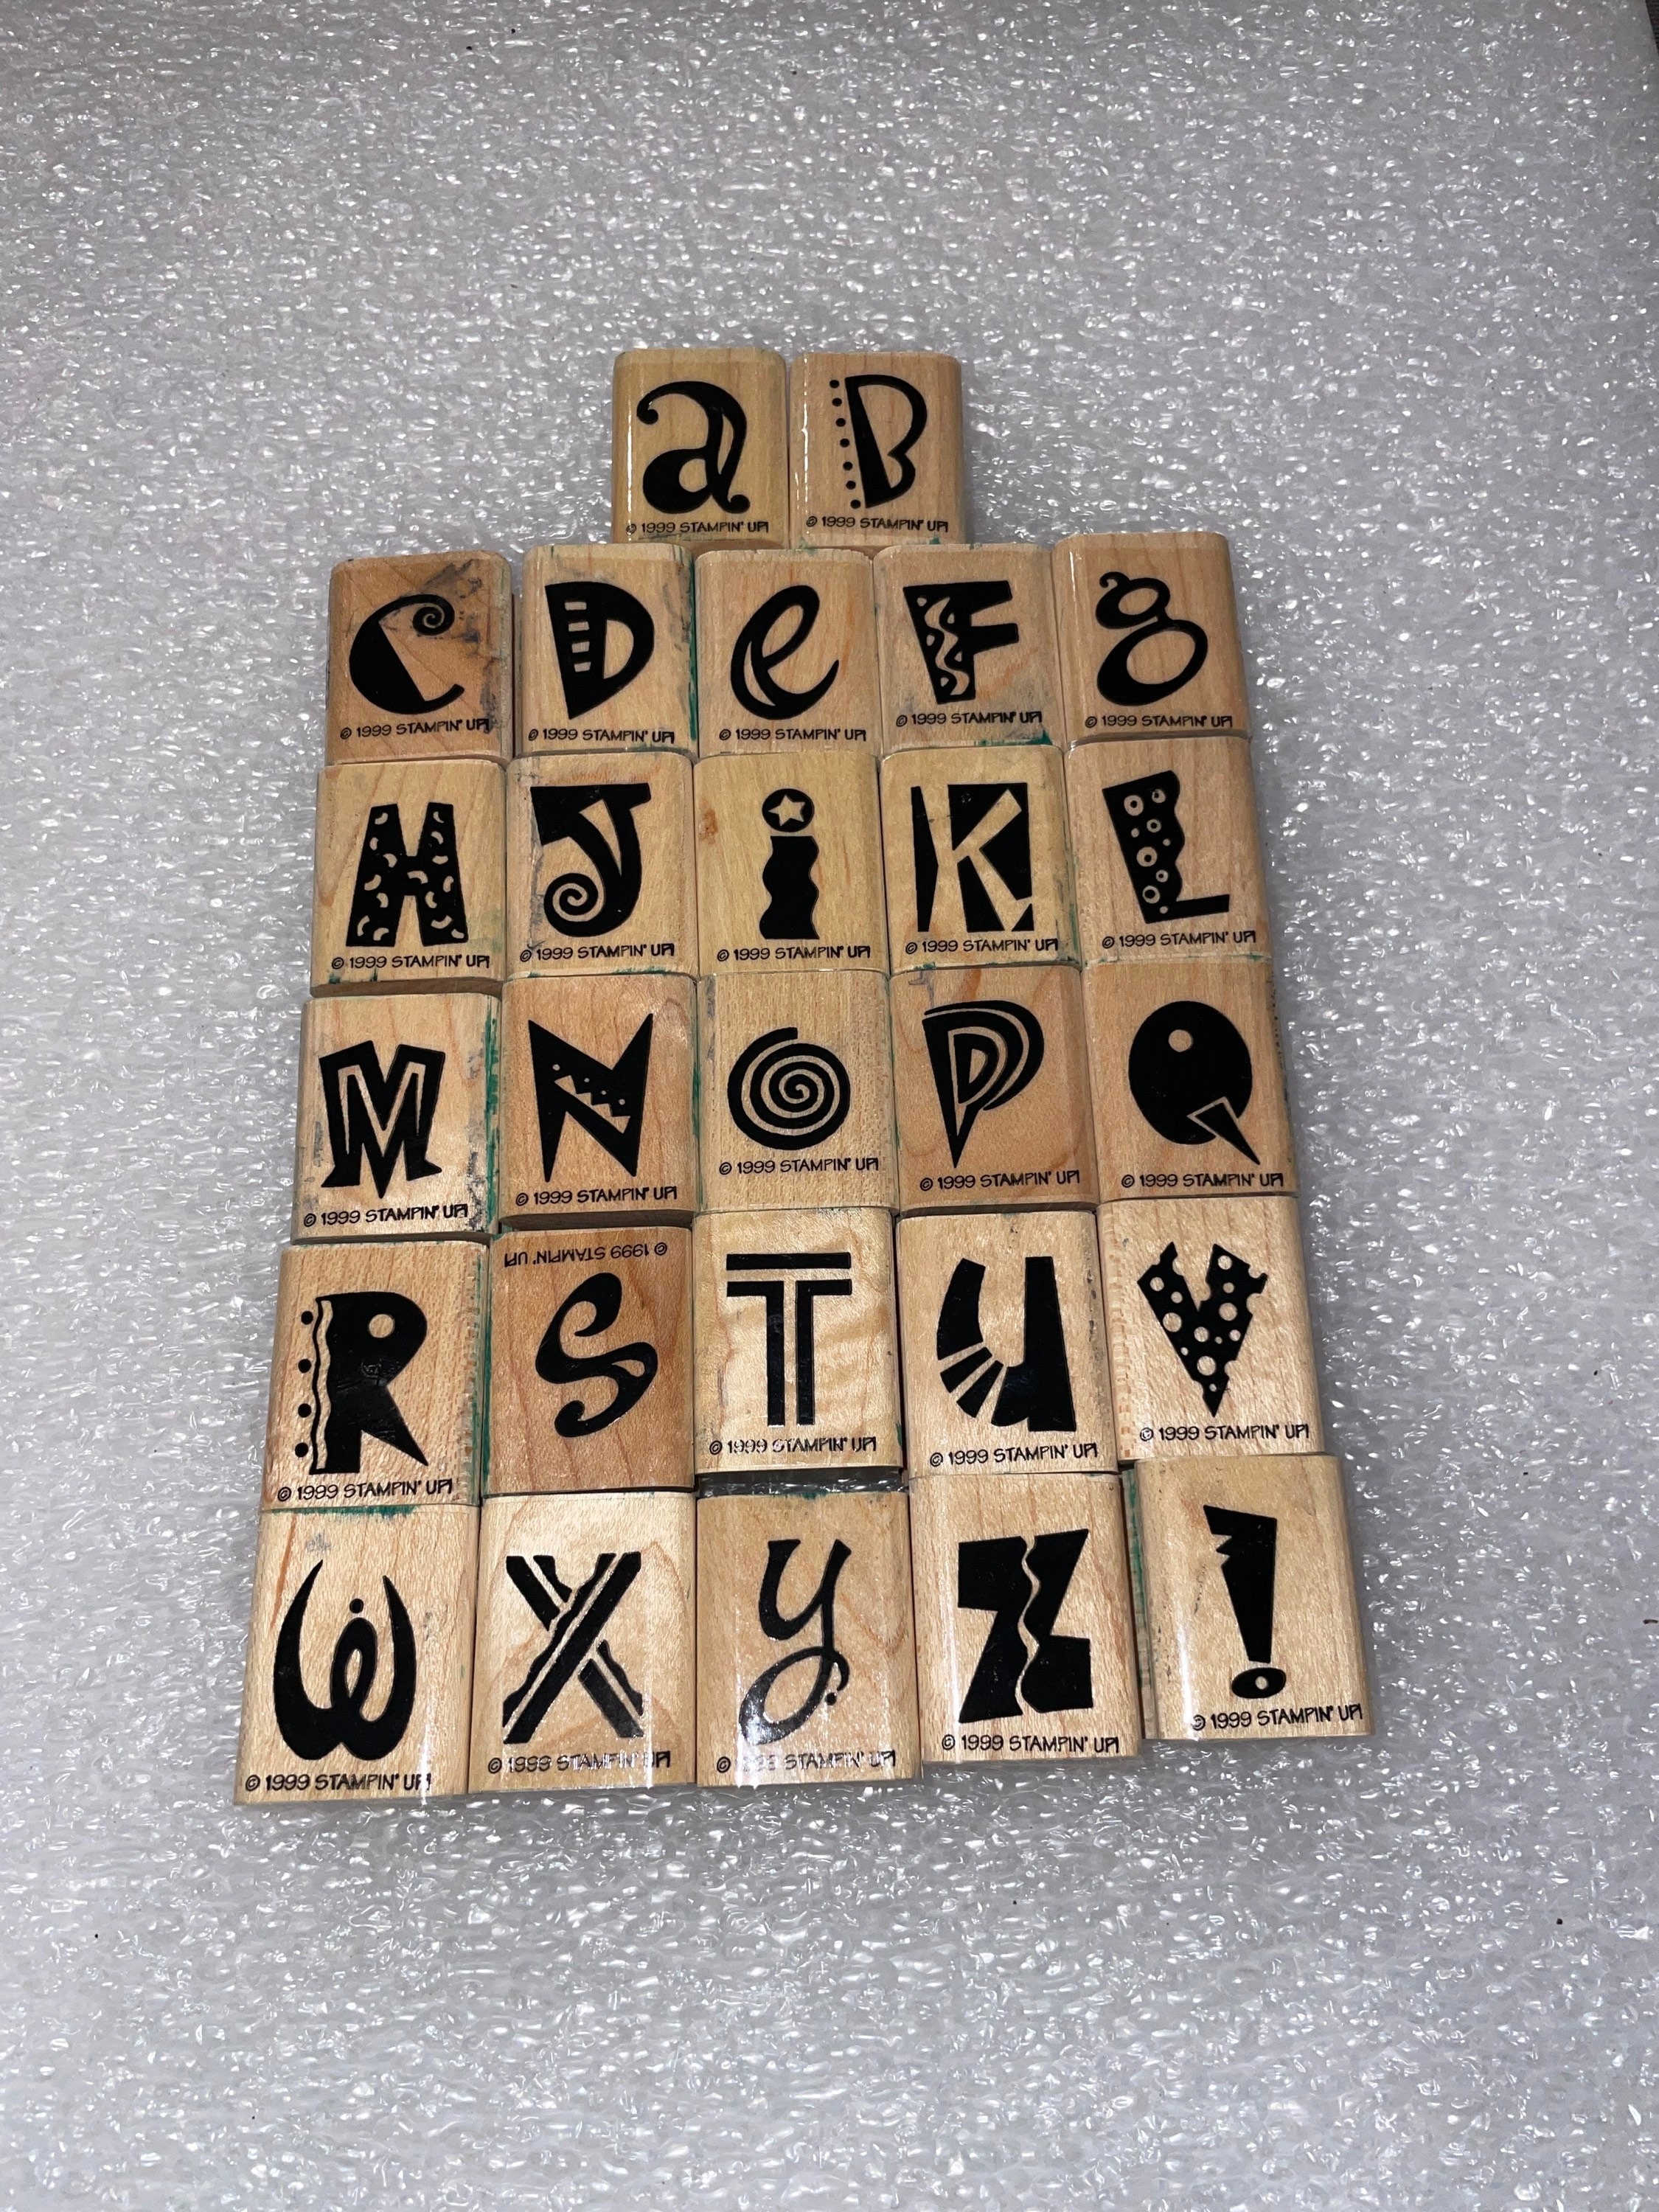 Brevero 75pcs Letter Stamps | Alphabet Stamps Vintage Wooden Includes 5 Emojis Rubber Stamps for Crafts ABCs| Letter Number Stamping Set |Wooden